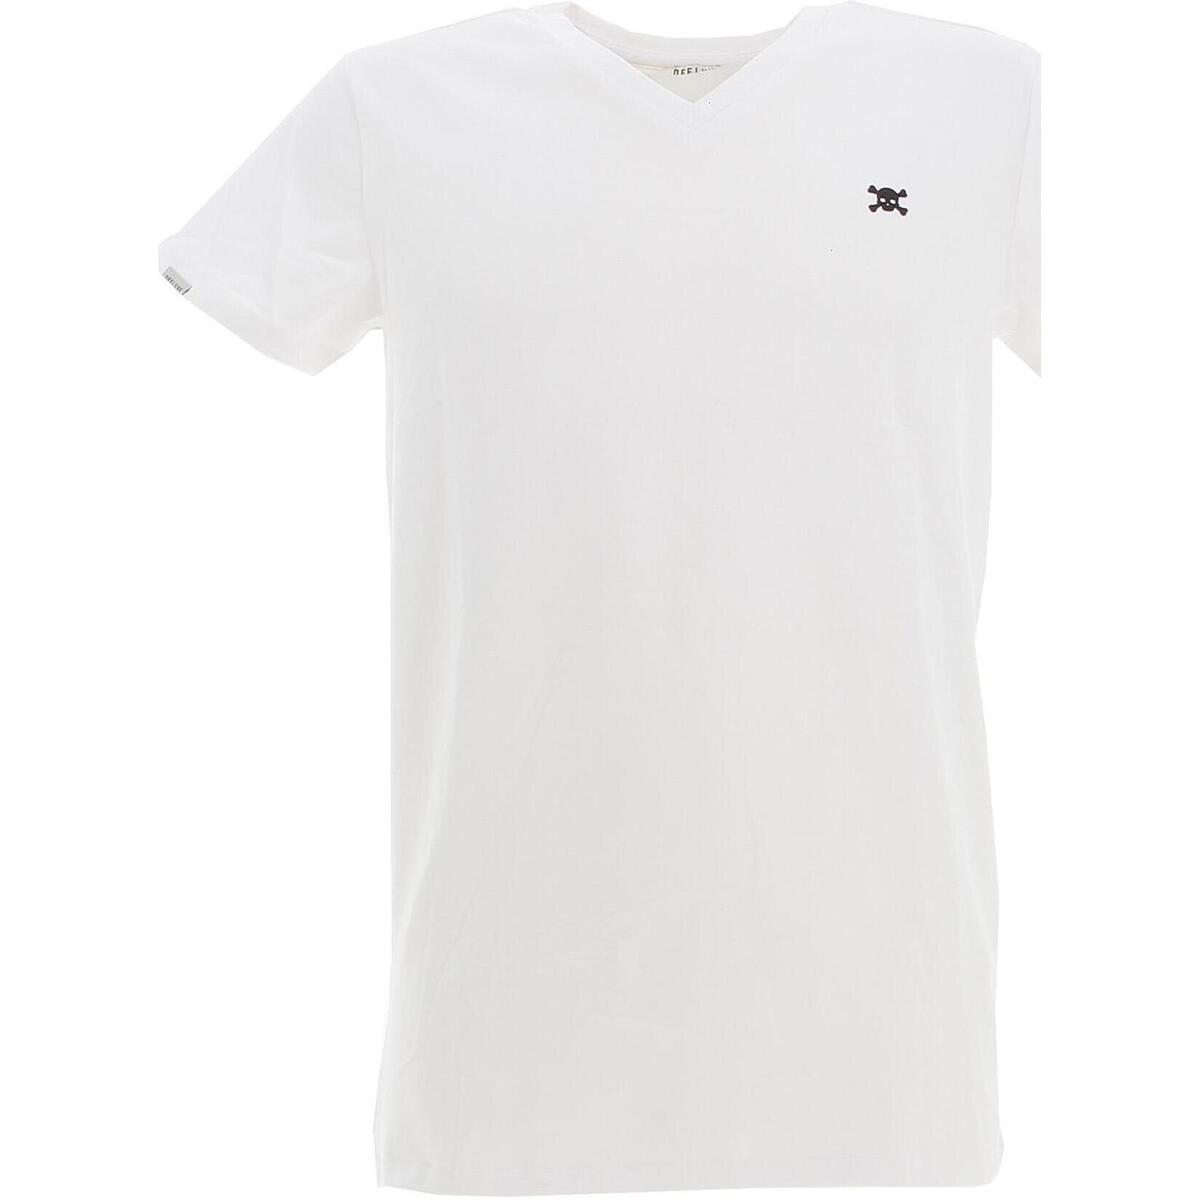 Vêtements Homme chanel pre owned cc button shirt item Yazel ts m Blanc